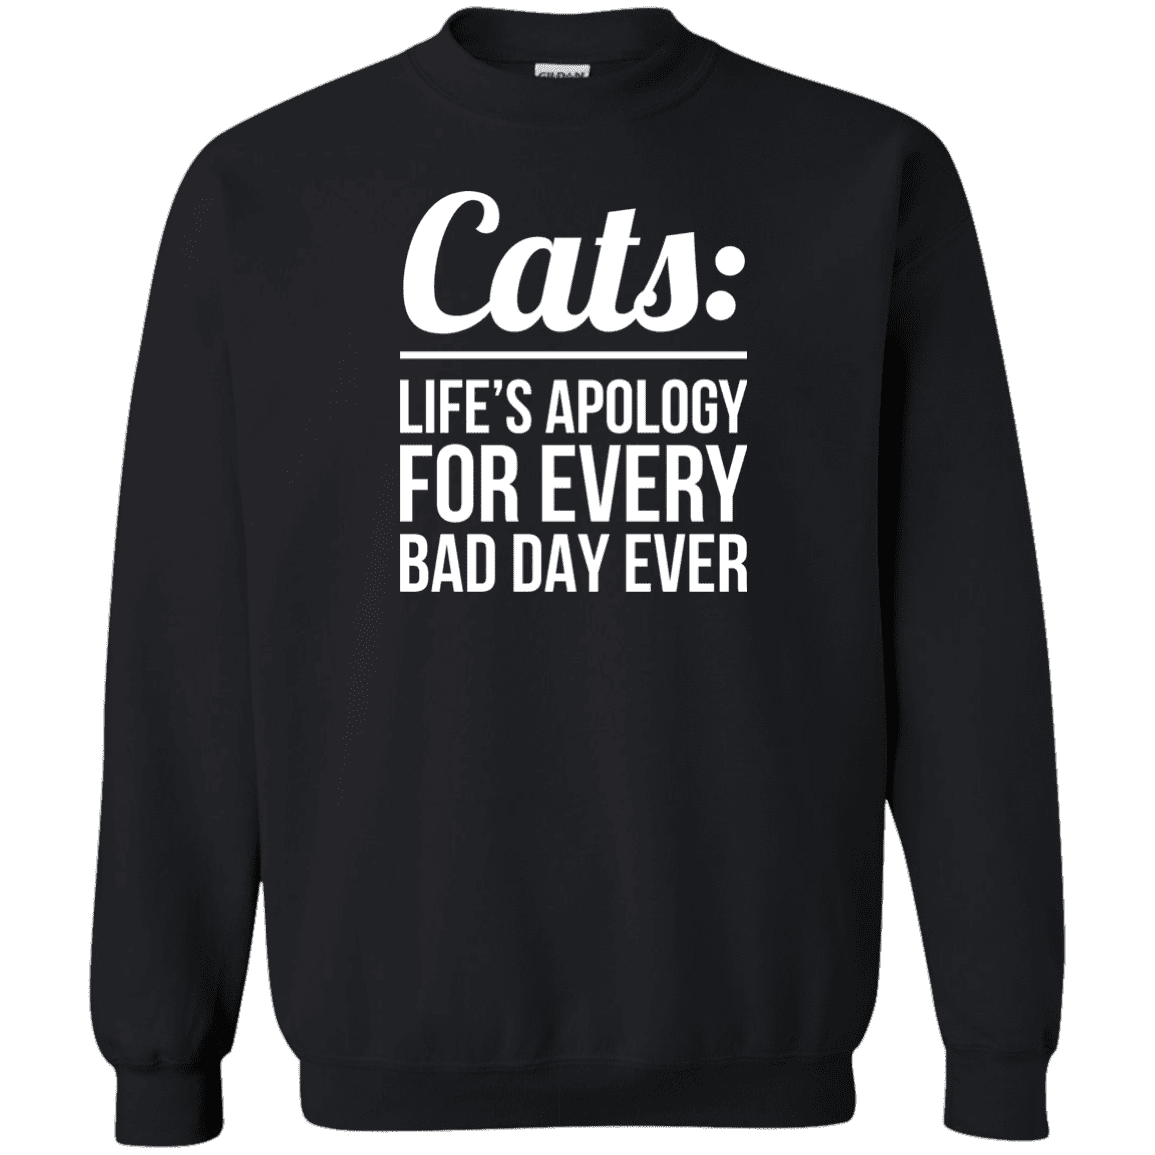 Cats Life's Apology - Sweatshirt.